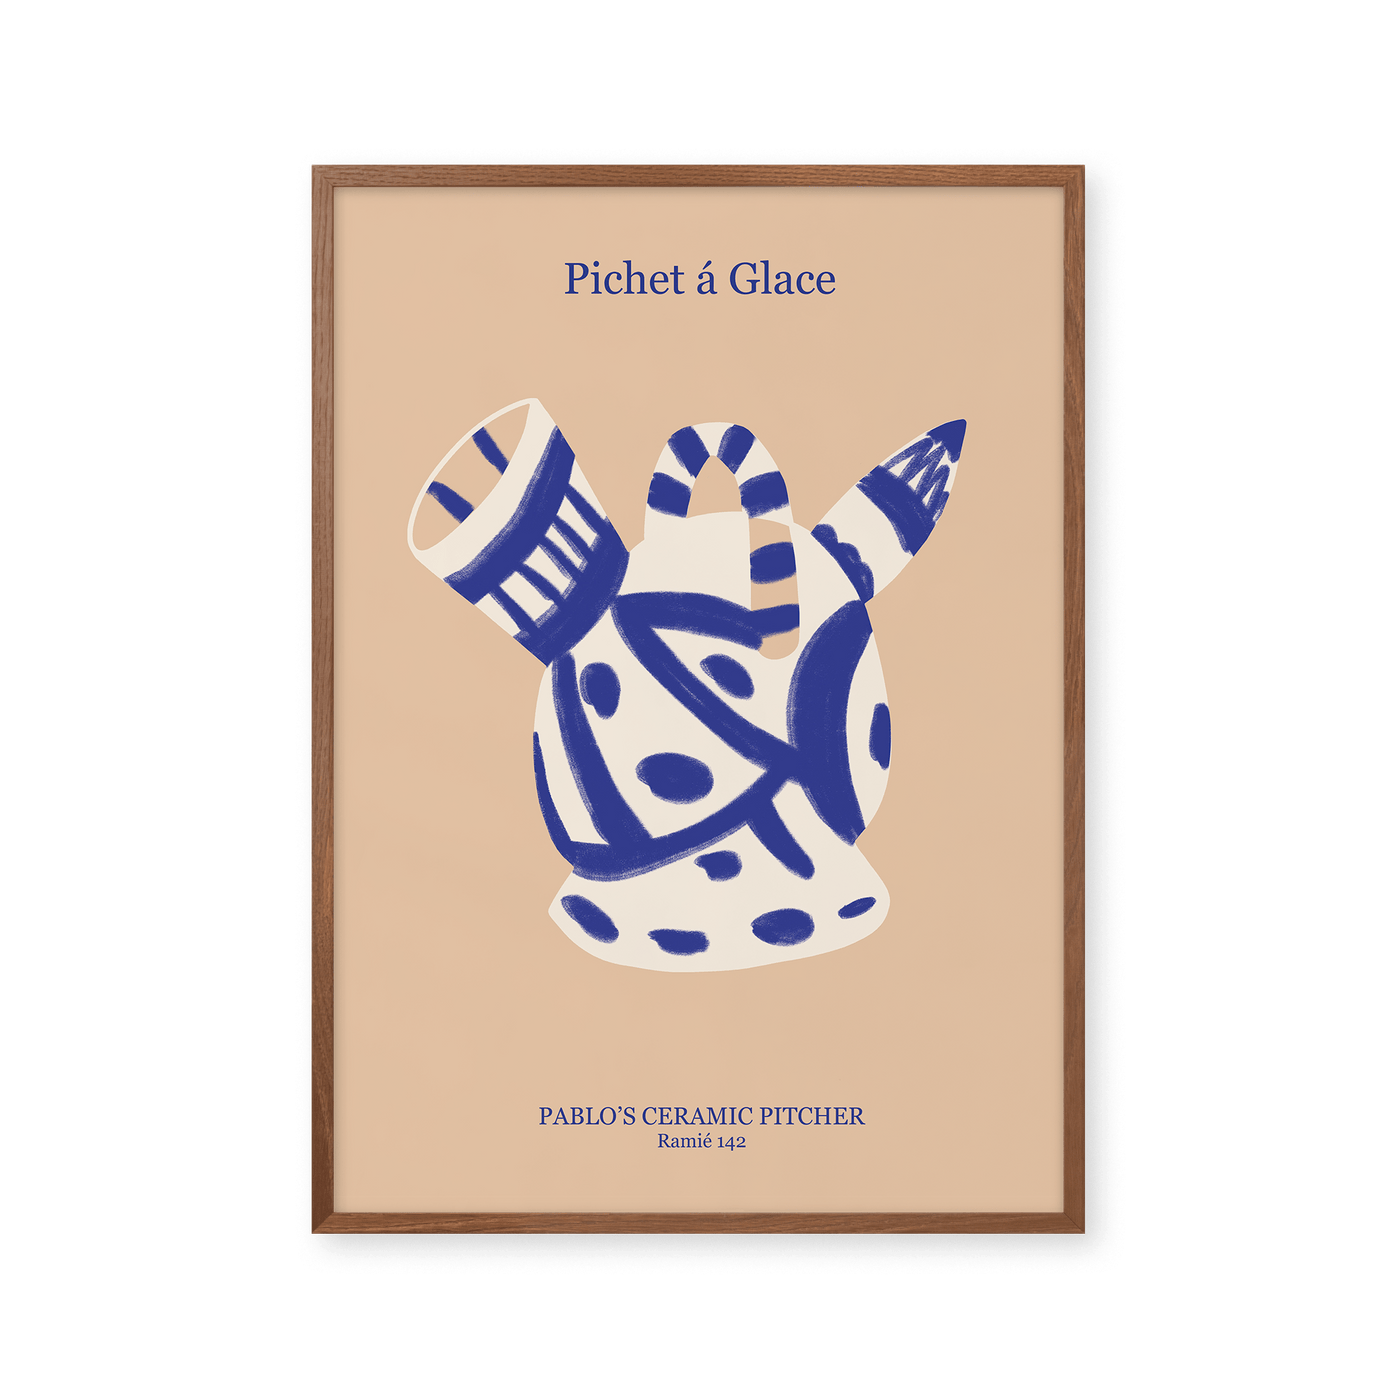 Pablo ceramic pitcher